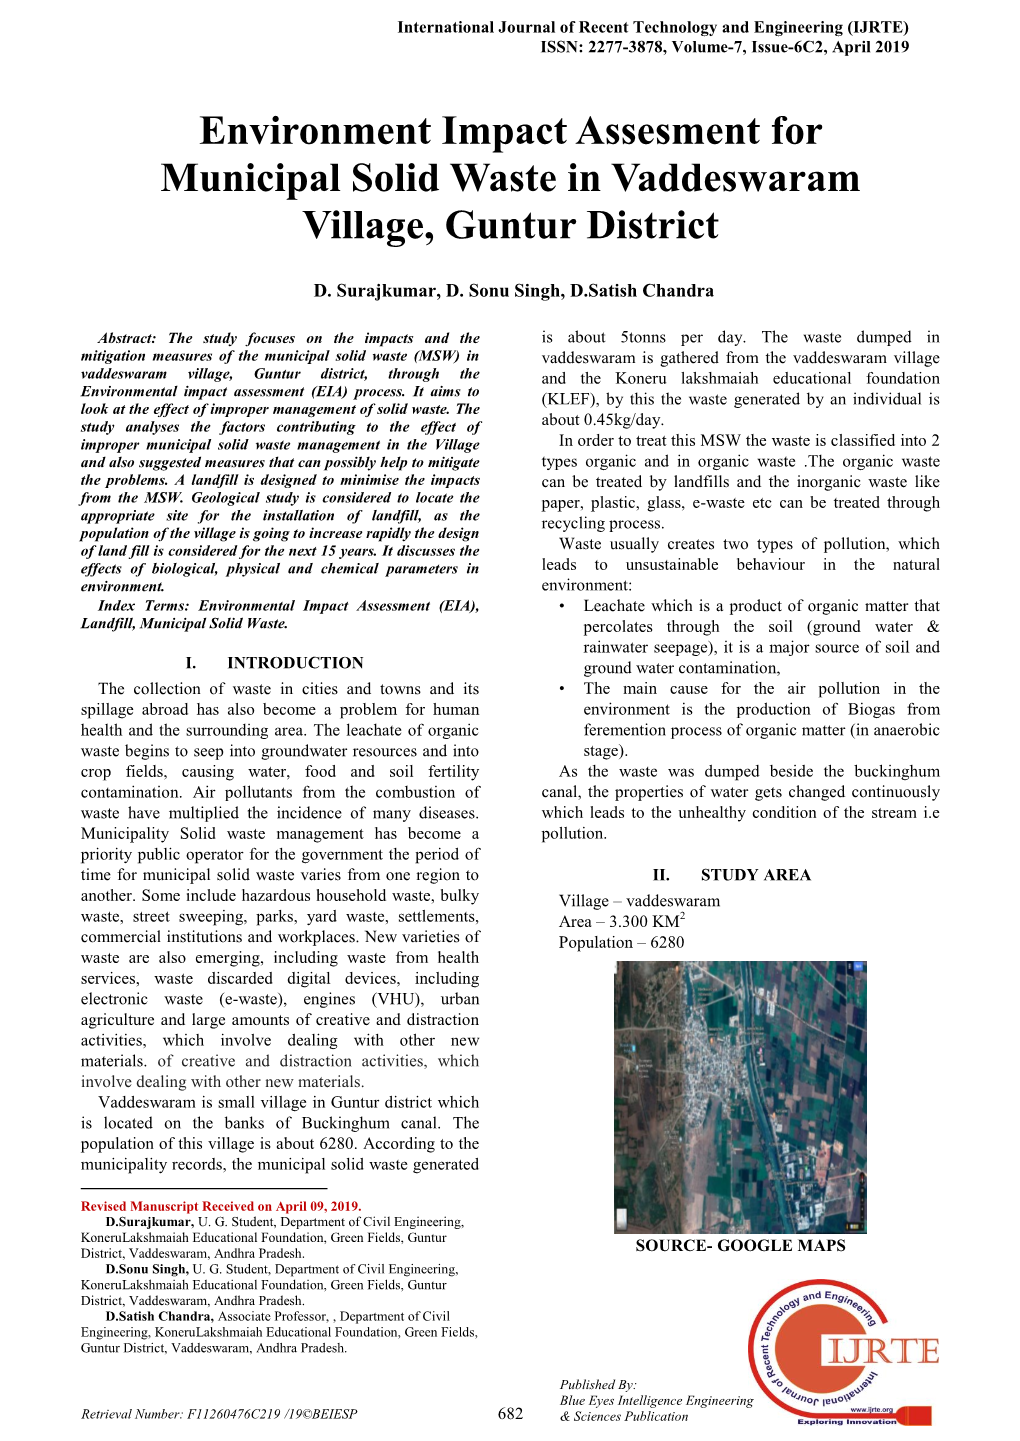 Environment Impact Assesment for Municipal Solid Waste in Vaddeswaram Village, Guntur District